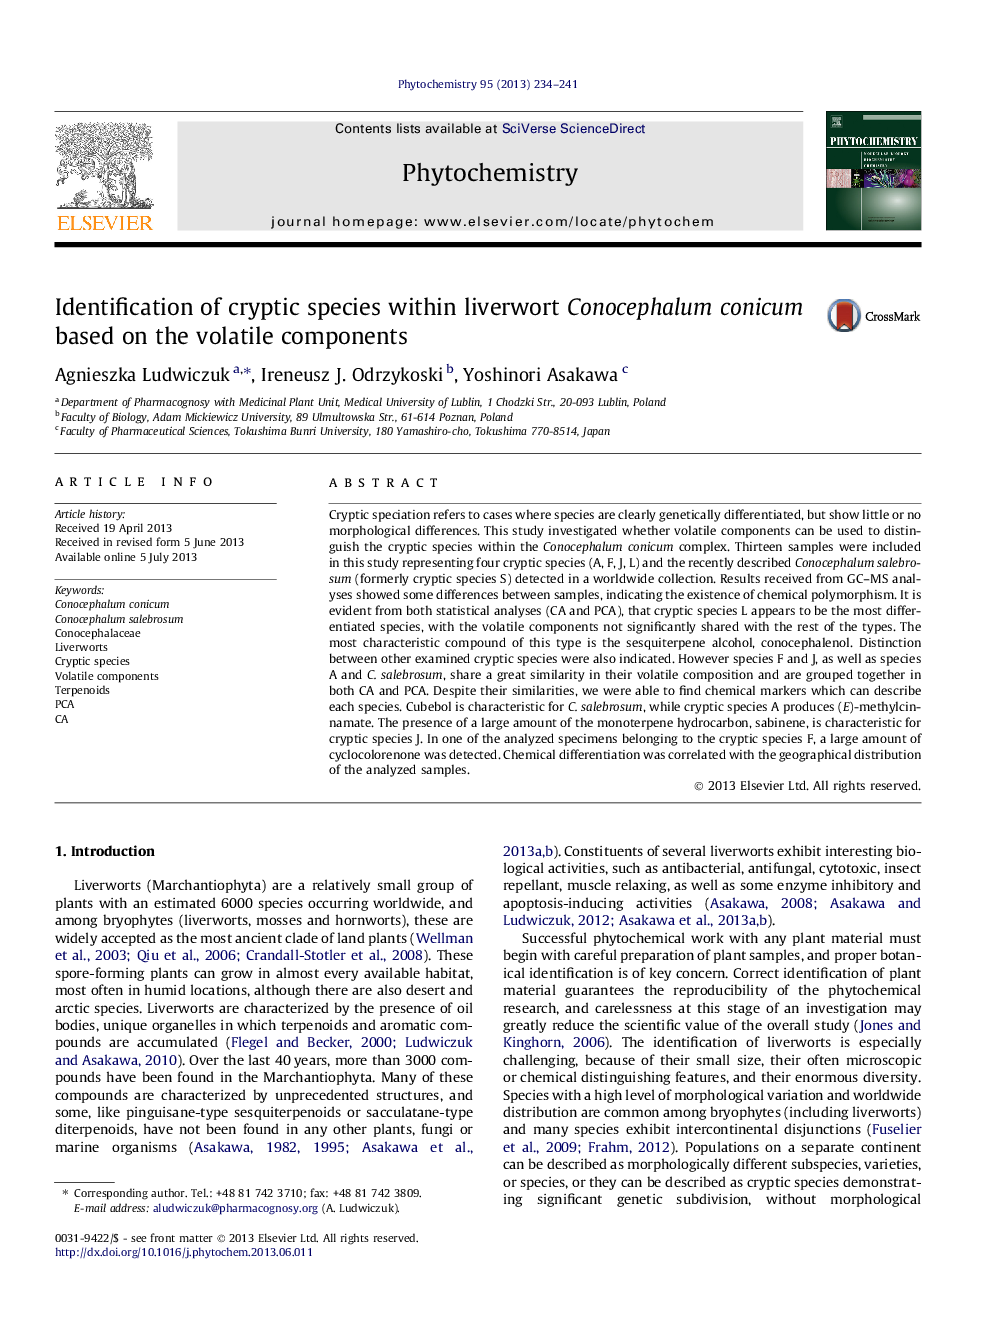 Identification of cryptic species within liverwort Conocephalum conicum based on the volatile components